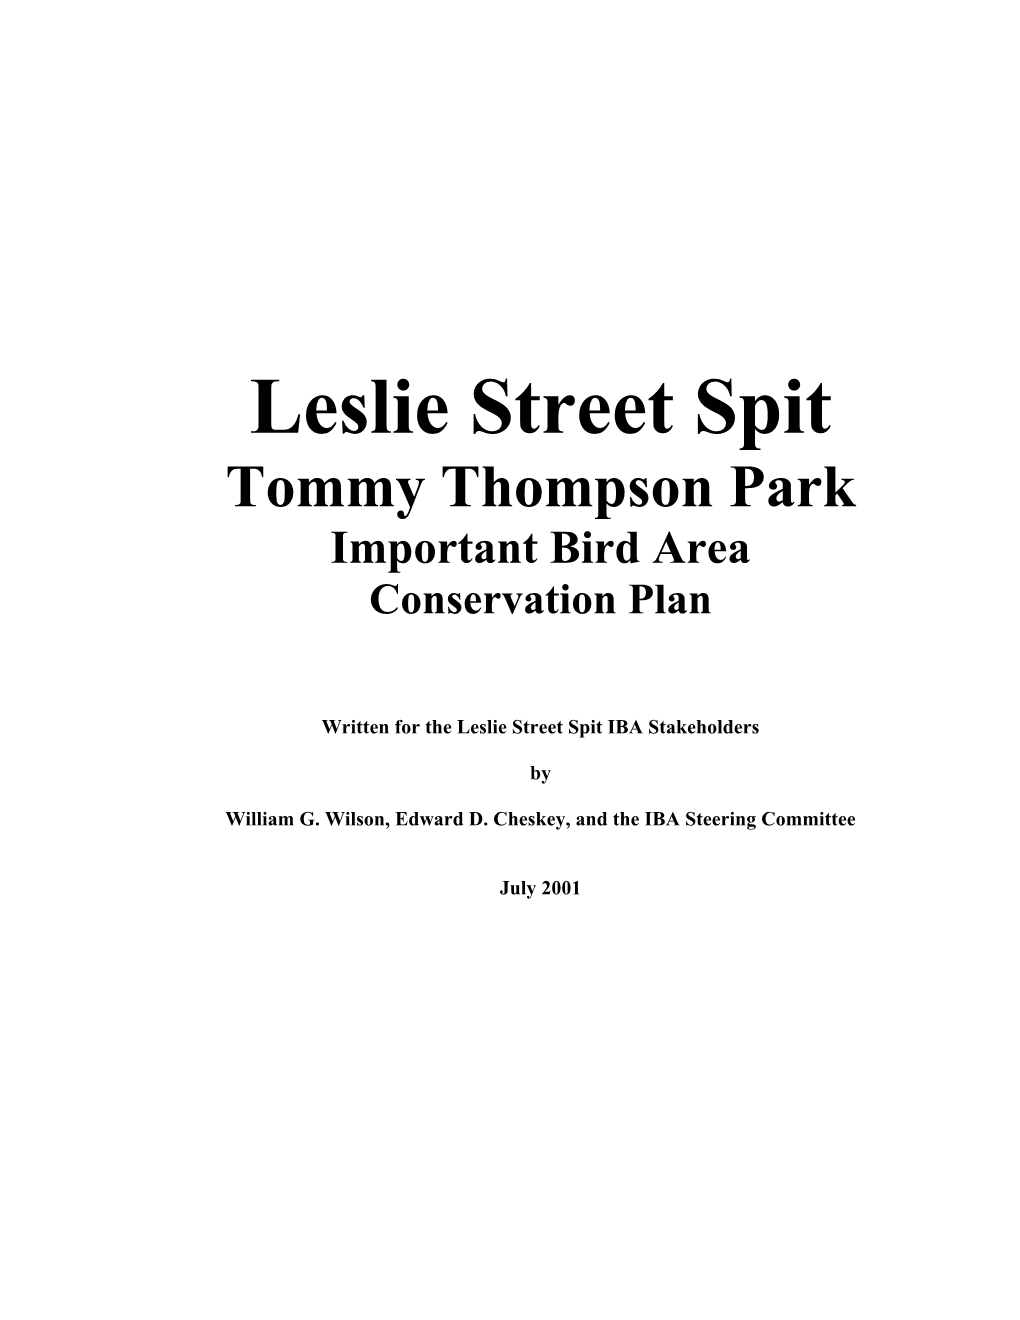 Leslie Street Spit/Tommy Thompson Park